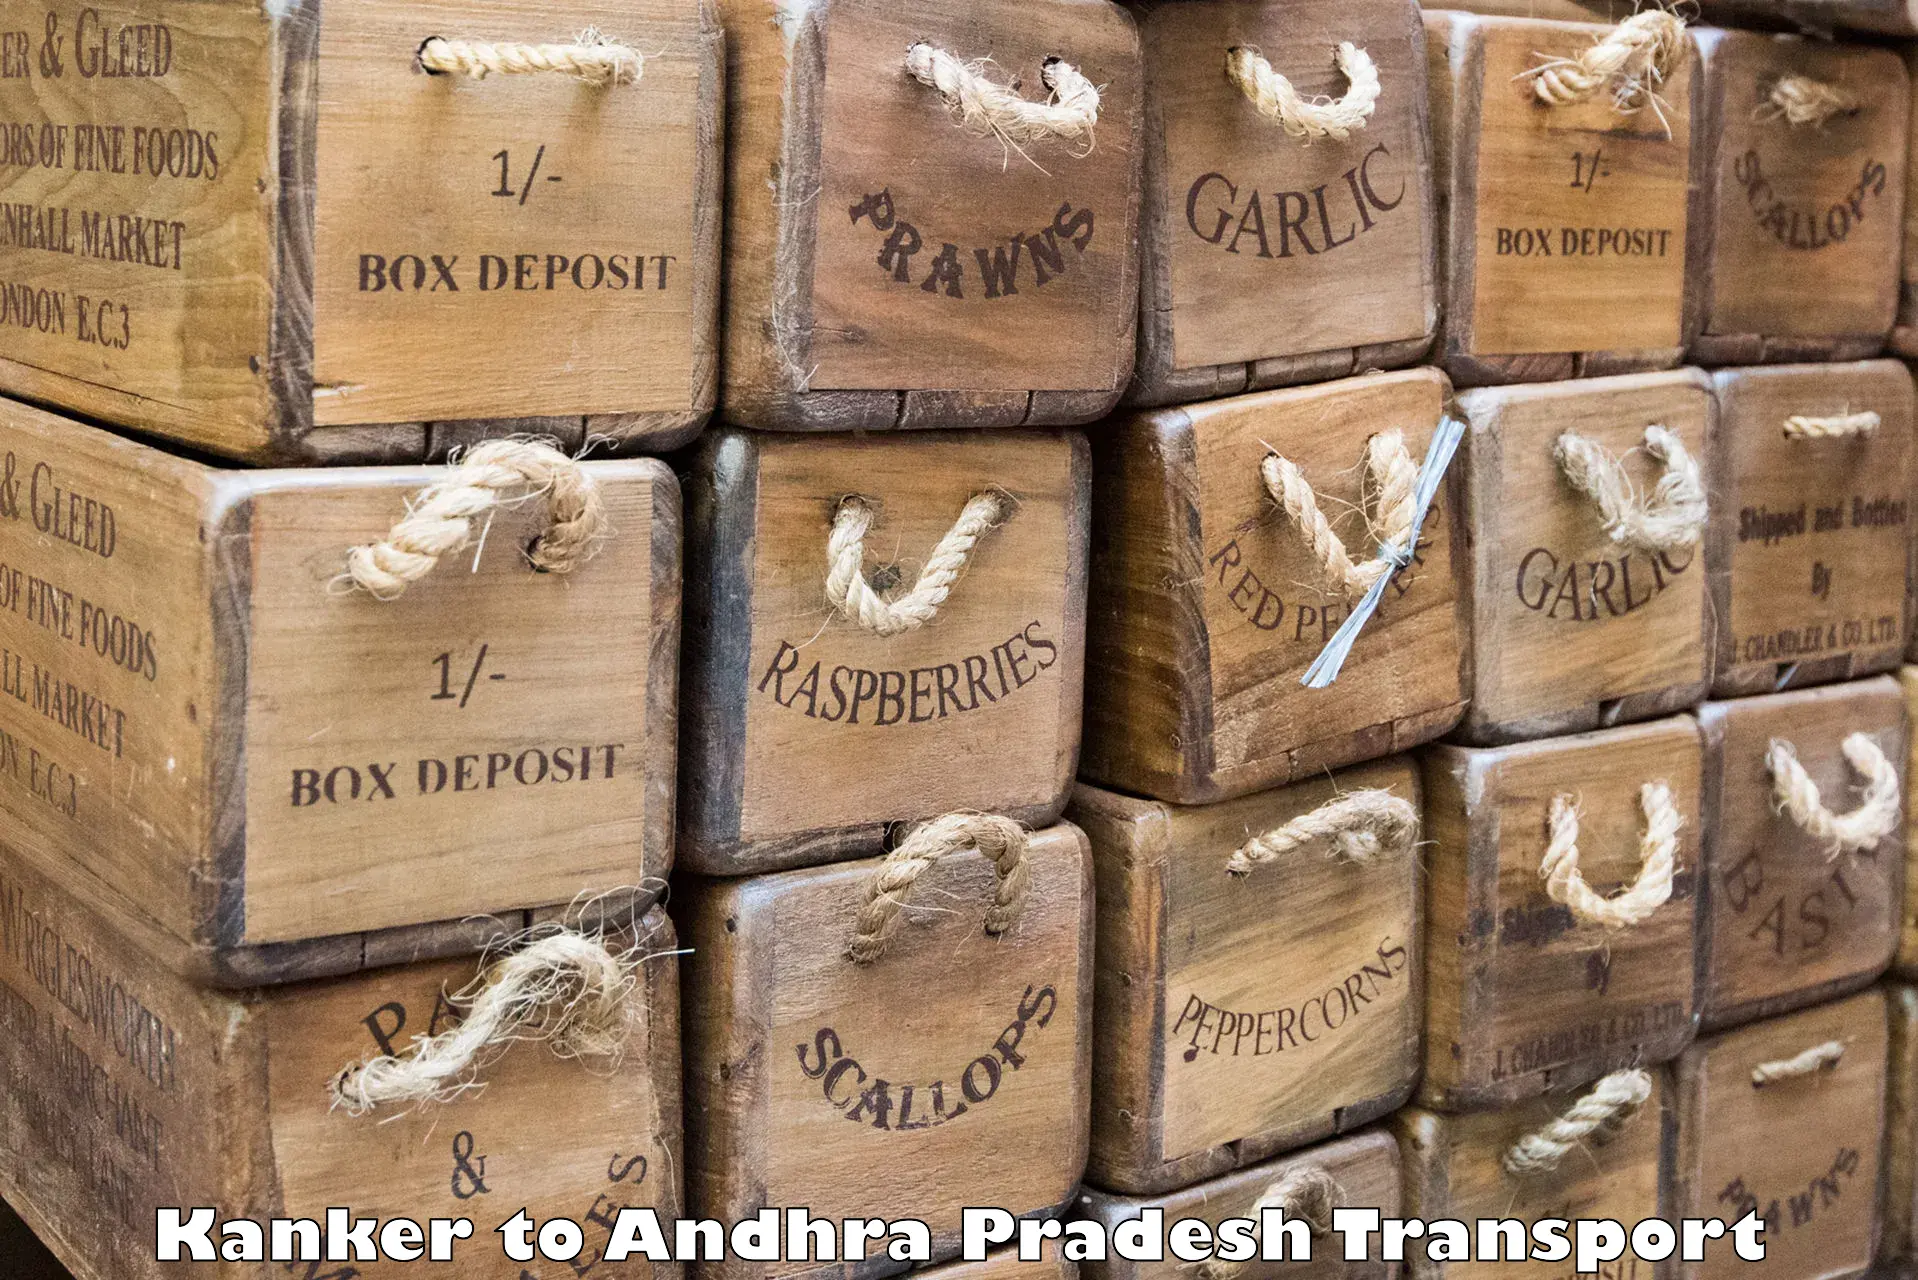 Air freight transport services Kanker to Velgodu